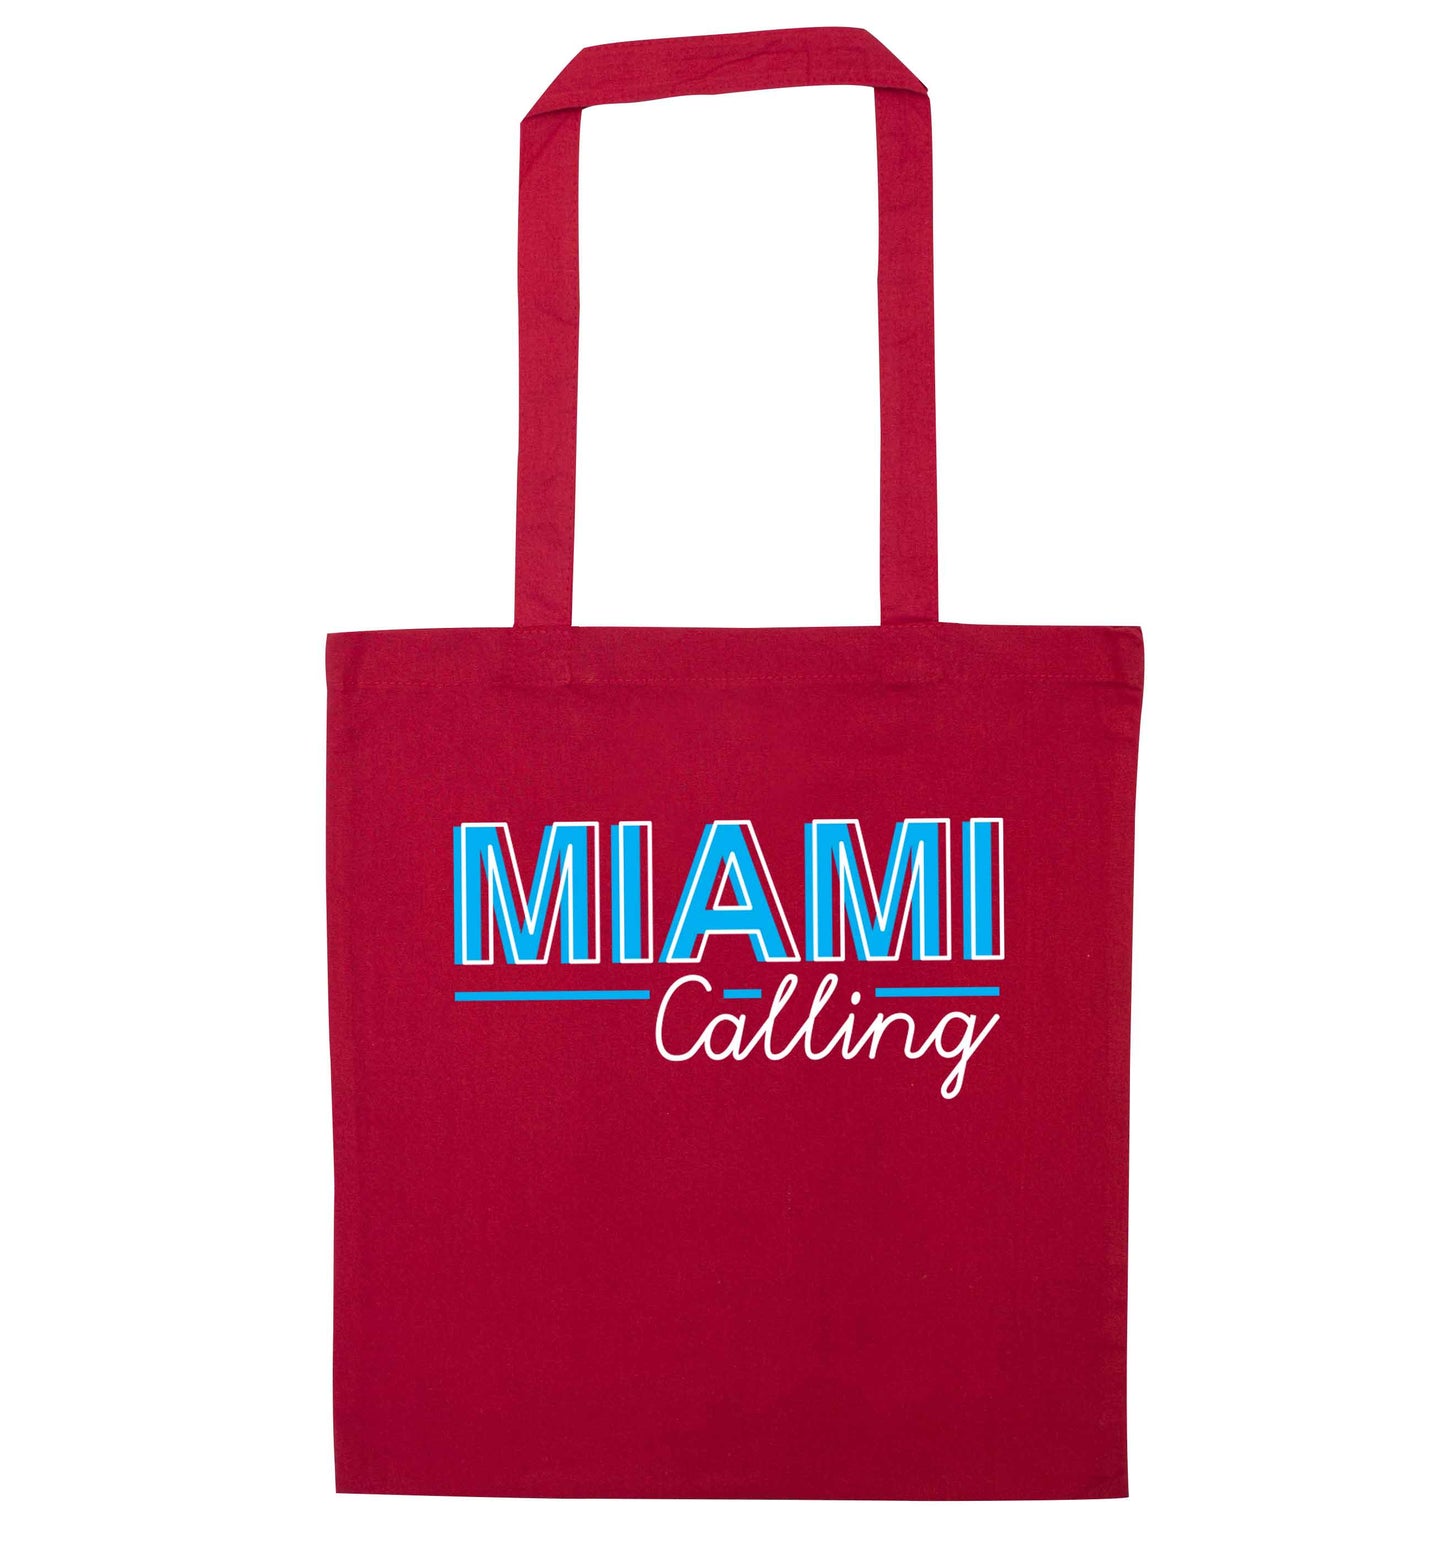 Miami calling red tote bag